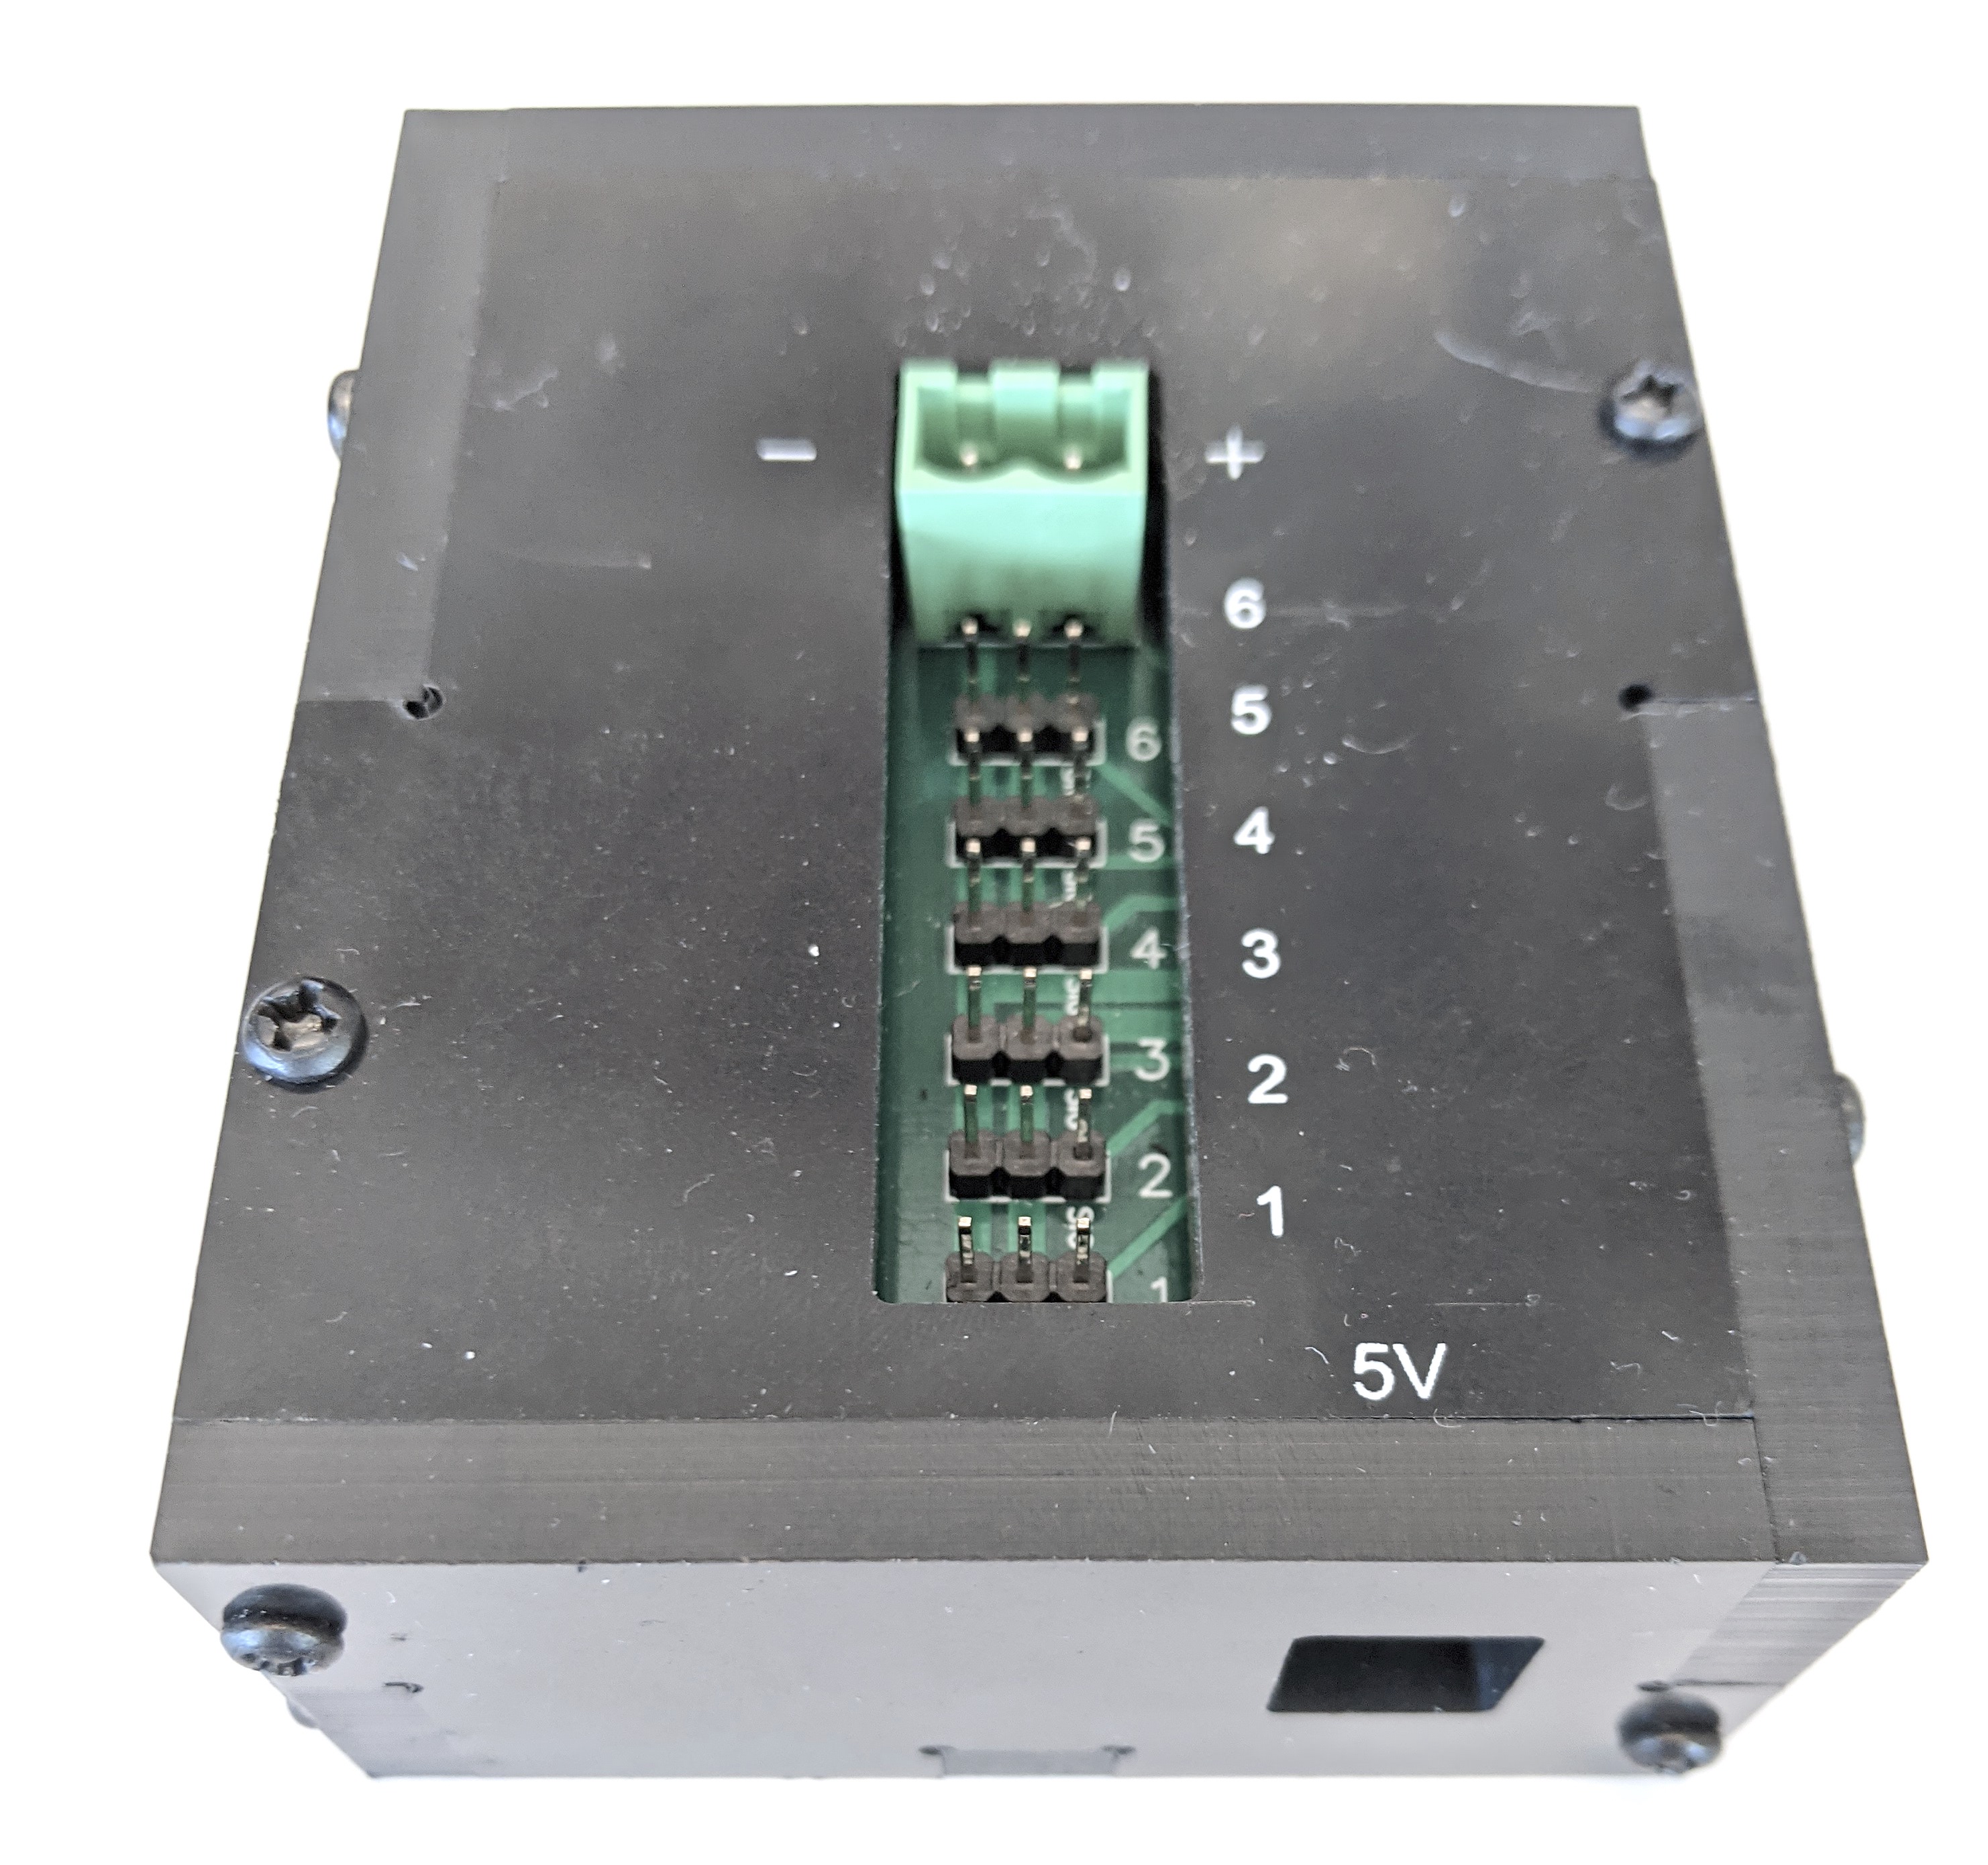 Controller Arduino a 6 canali con apertura per adattatore di alimentazione 5V